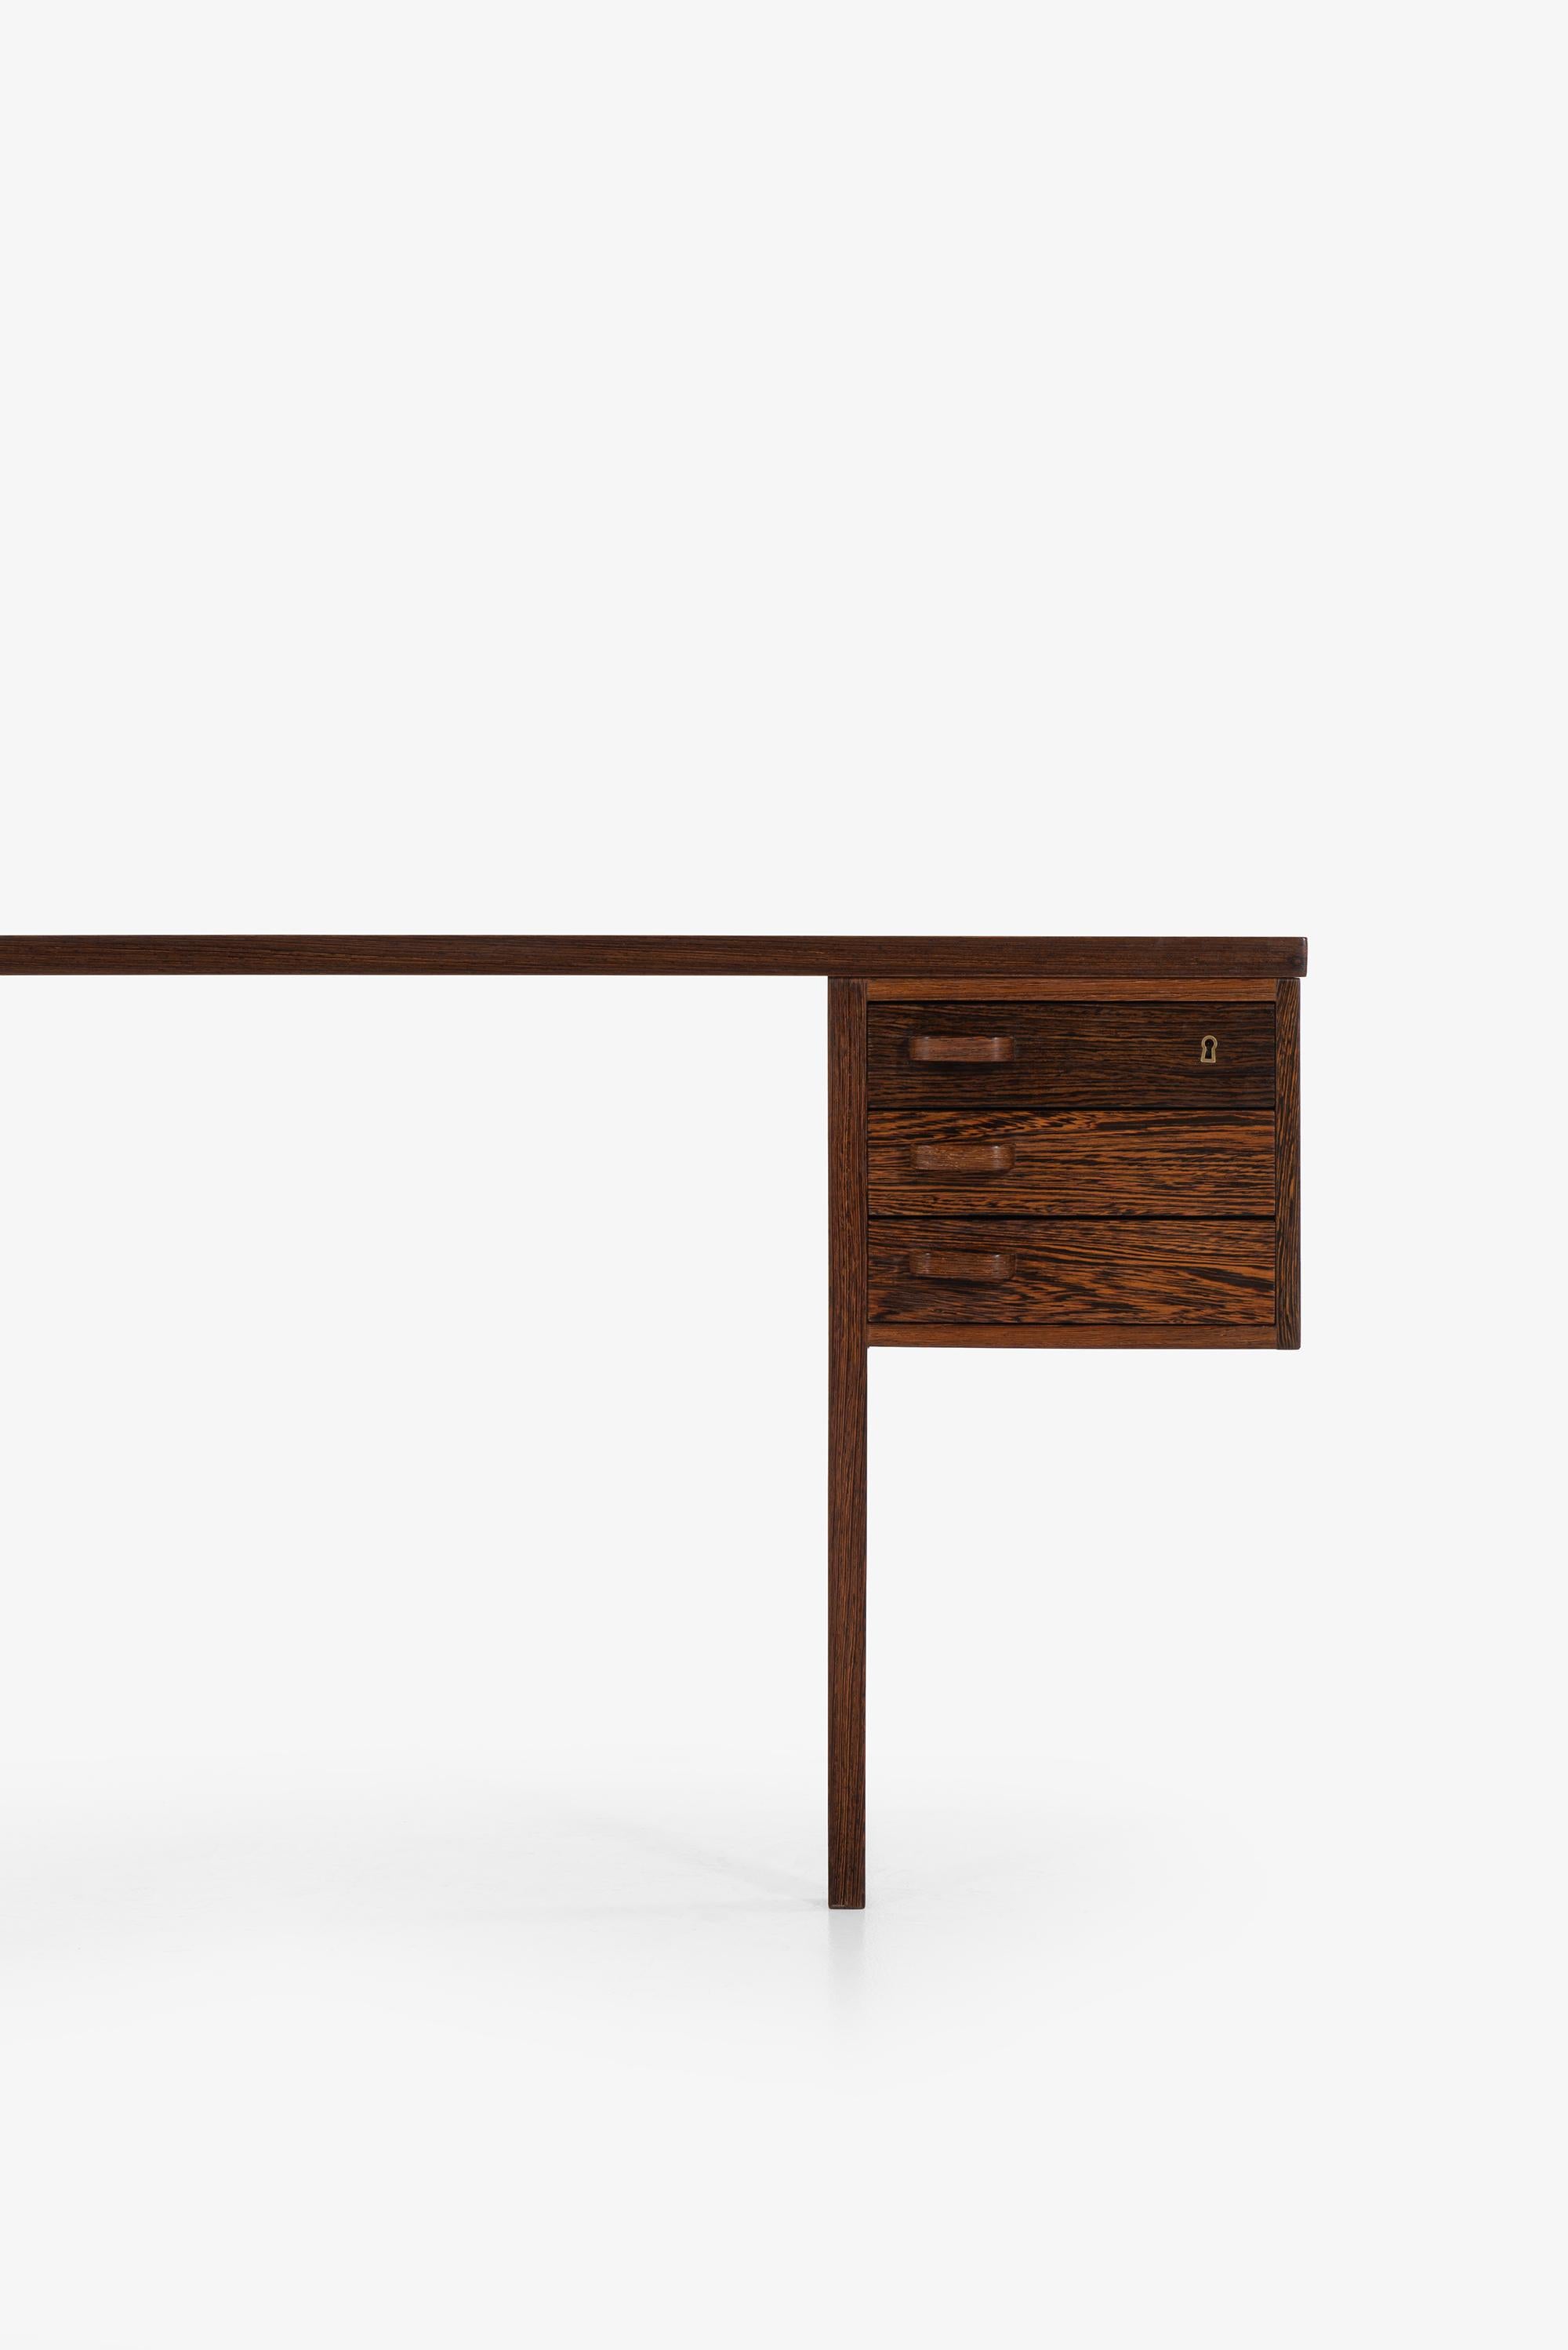 Very rare freestanding desk model 135 designed by Nanna & Jørgen Ditzel. Produced by Poul Kolds Savværk in Denmark.